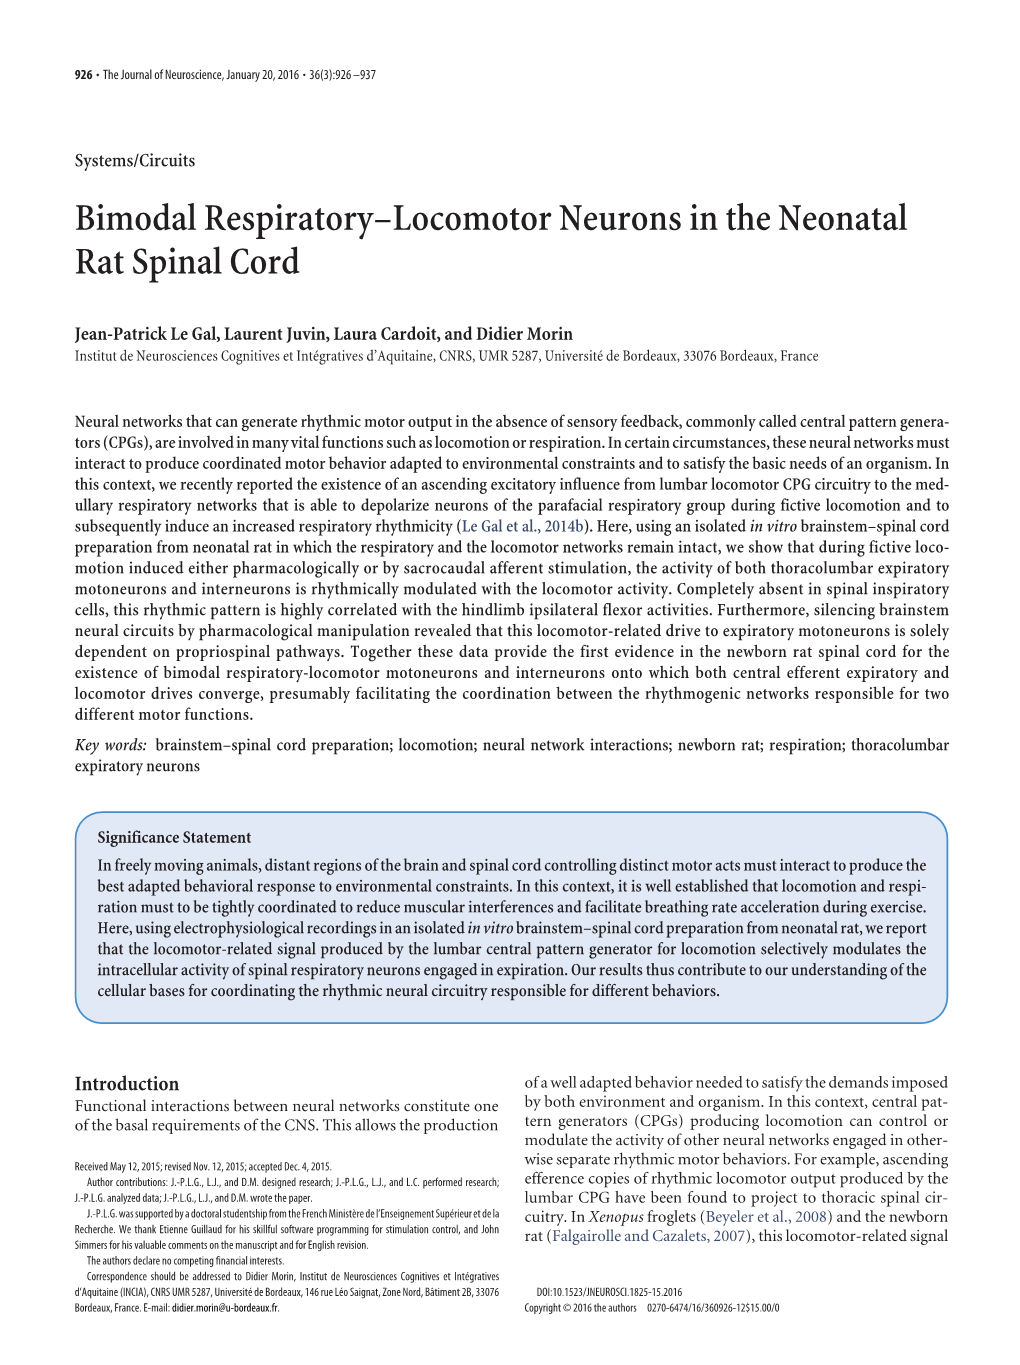 Bimodal Respiratory–Locomotor Neurons in the Neonatal Rat Spinal Cord